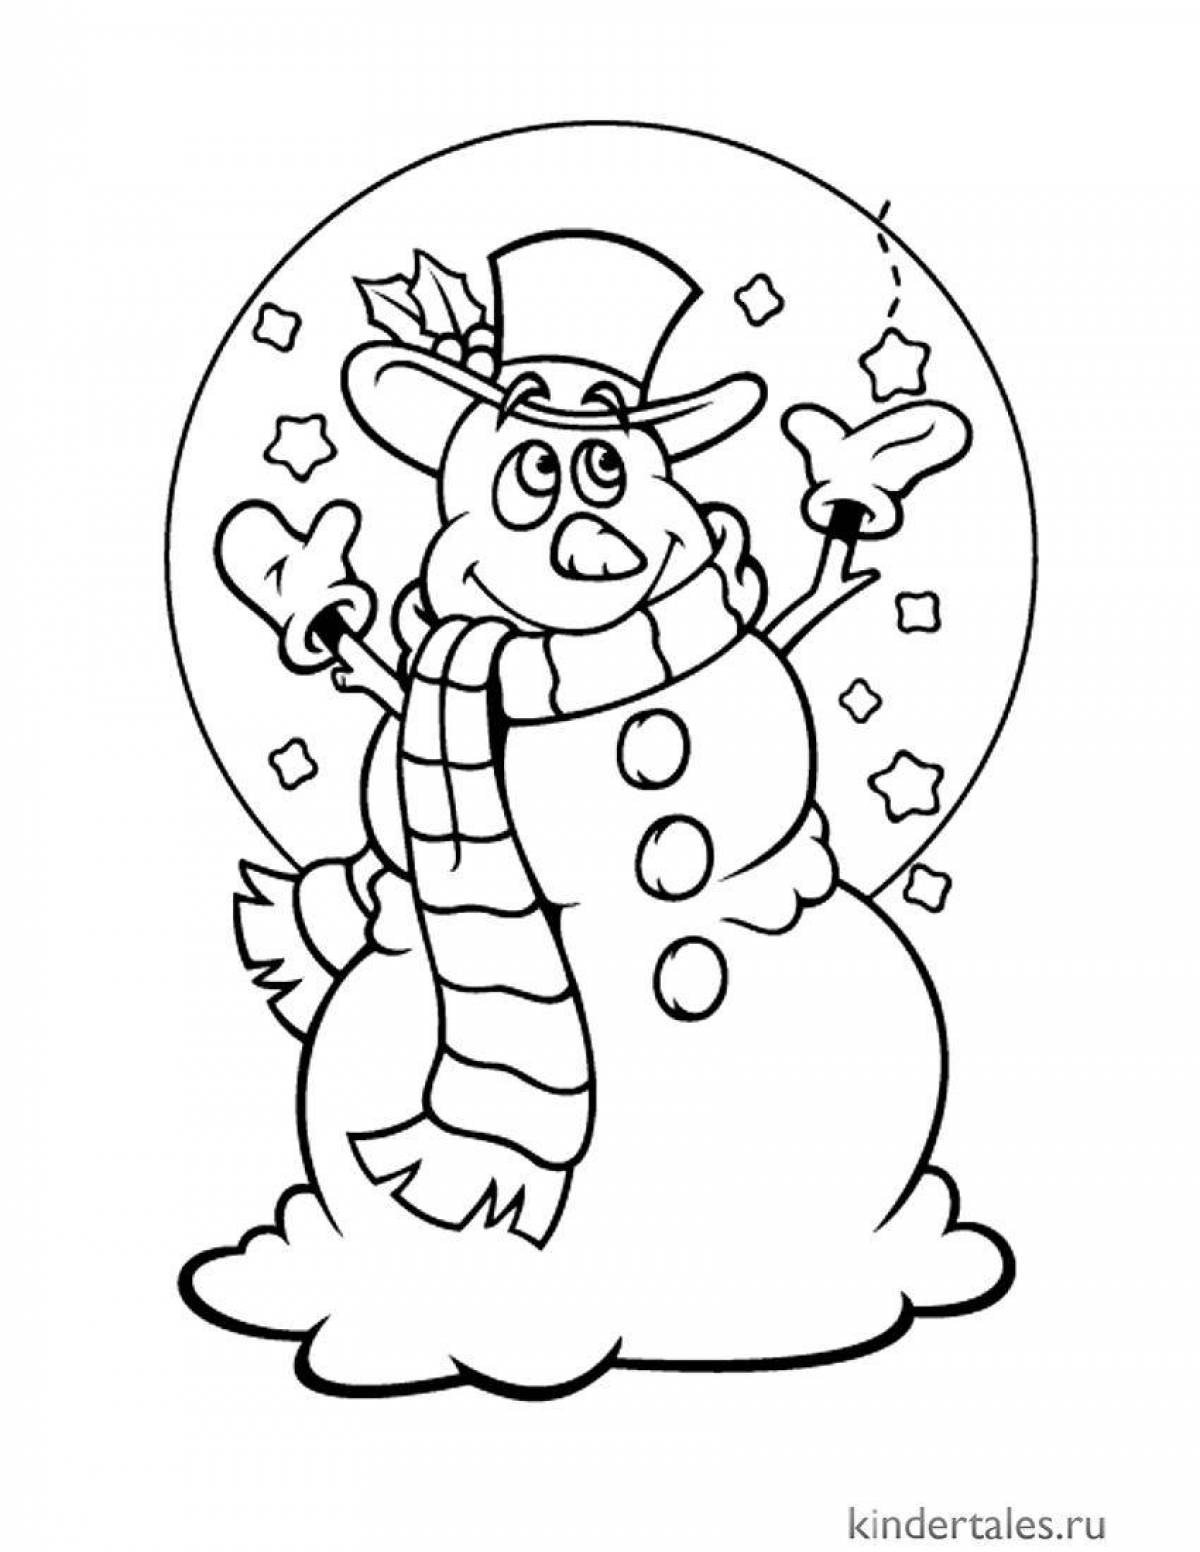 Adorable funny snowman coloring book